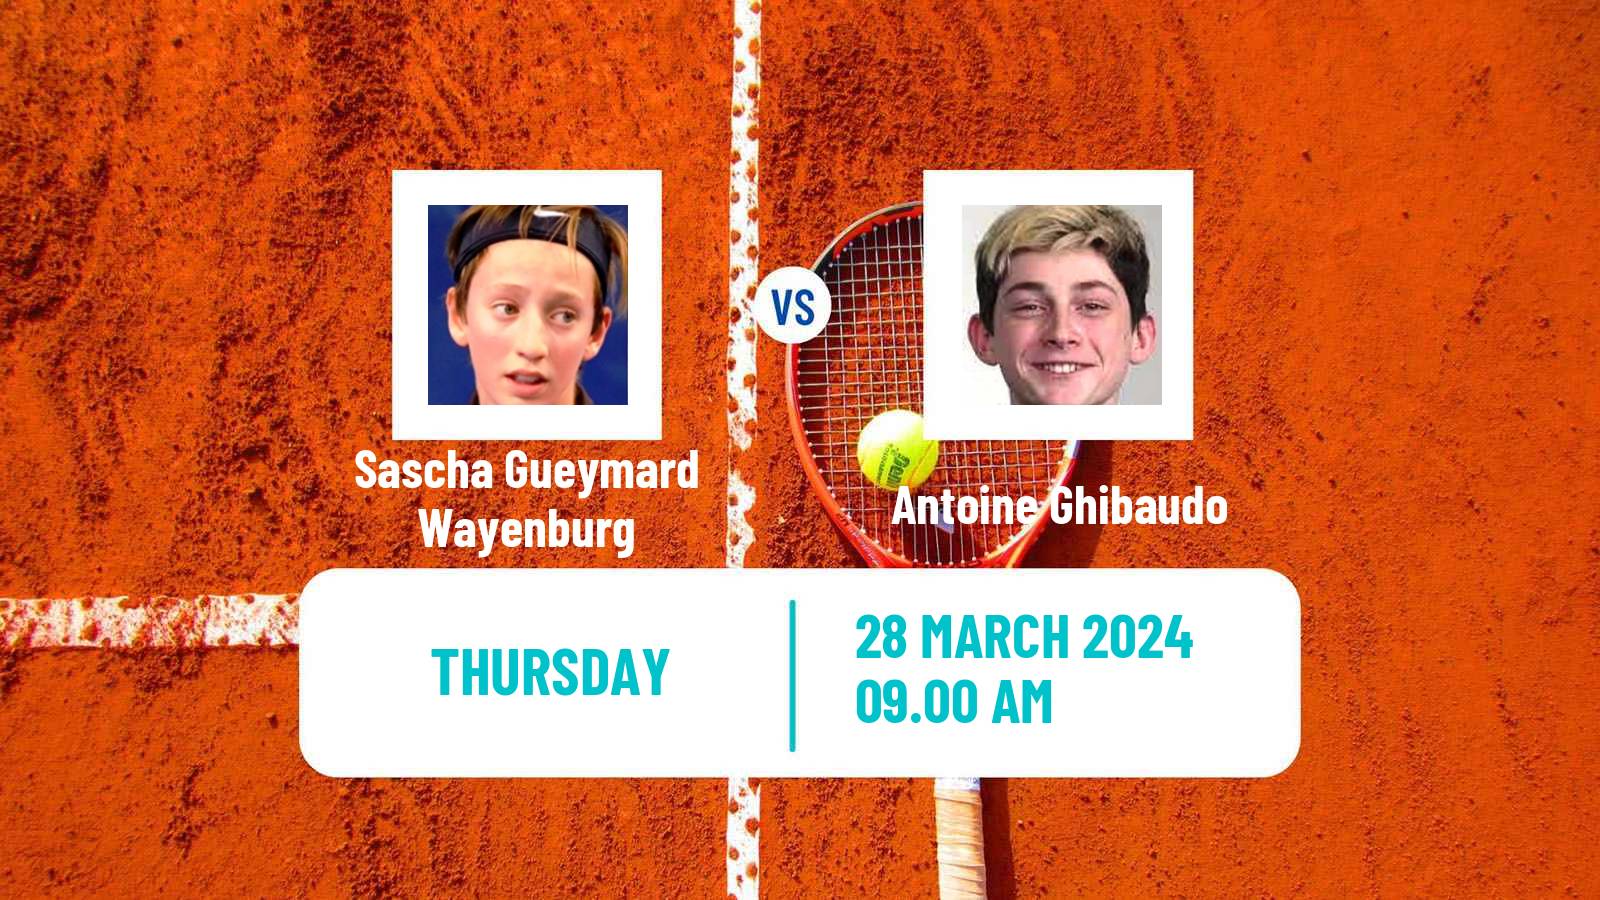 Tennis ITF M25 Saint Dizier Men Sascha Gueymard Wayenburg - Antoine Ghibaudo